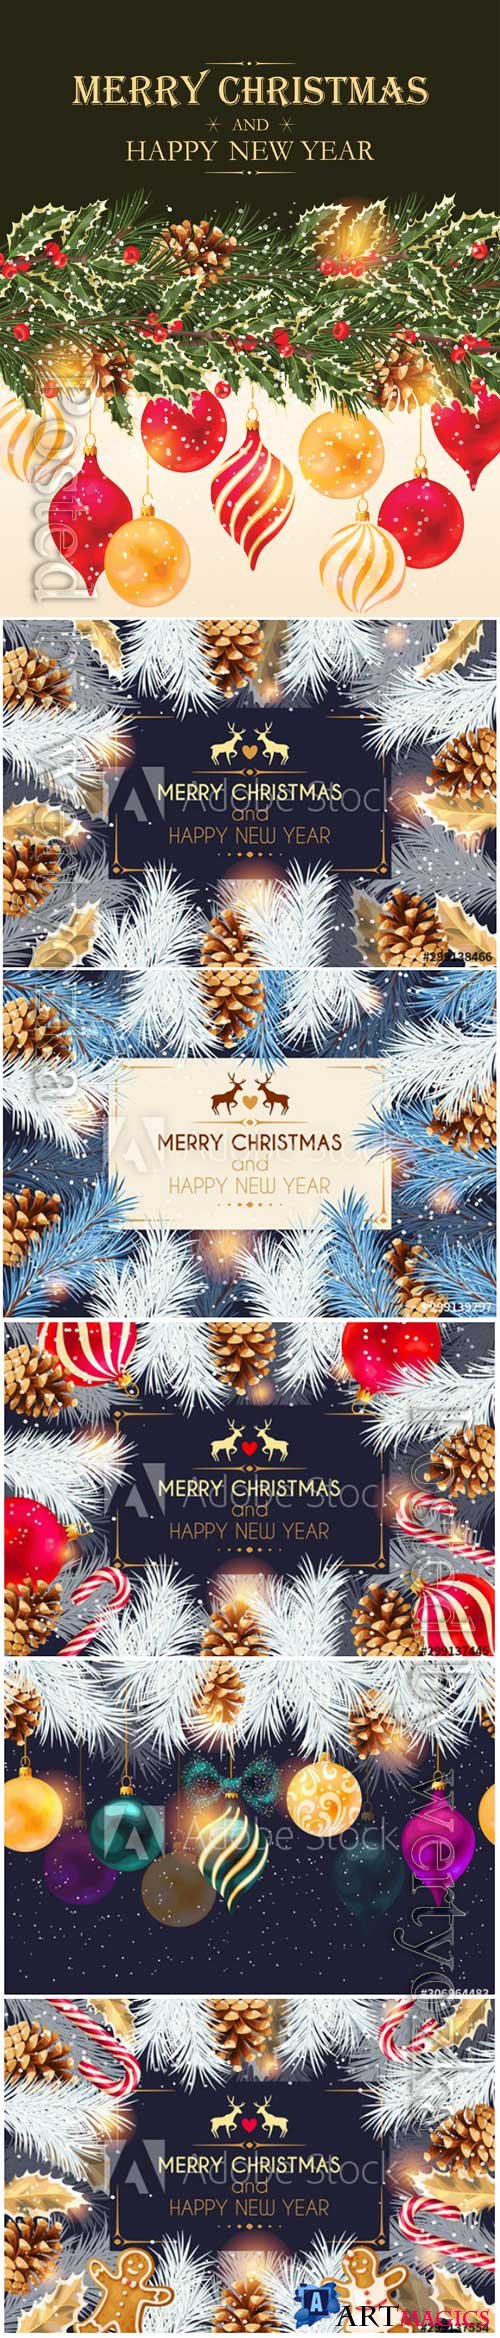 Christmas cards with cones, Christmas balls and Christmas tree